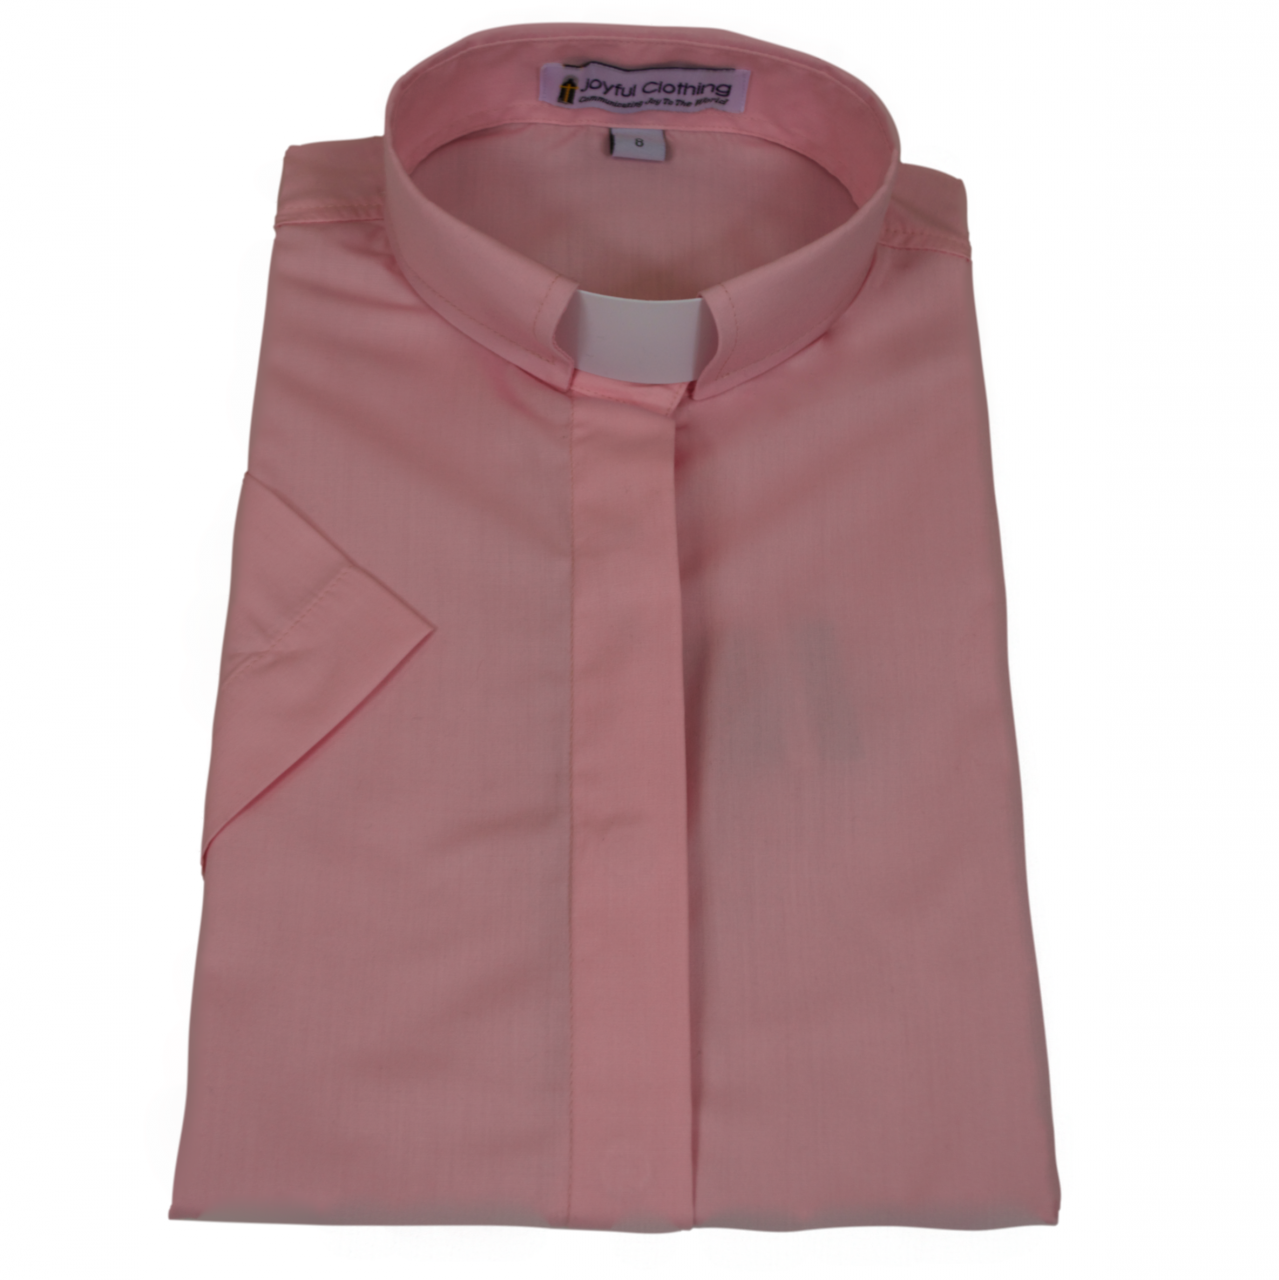 579. Women's Short-Sleeve Tab-Collar Clergy Shirt - Pink